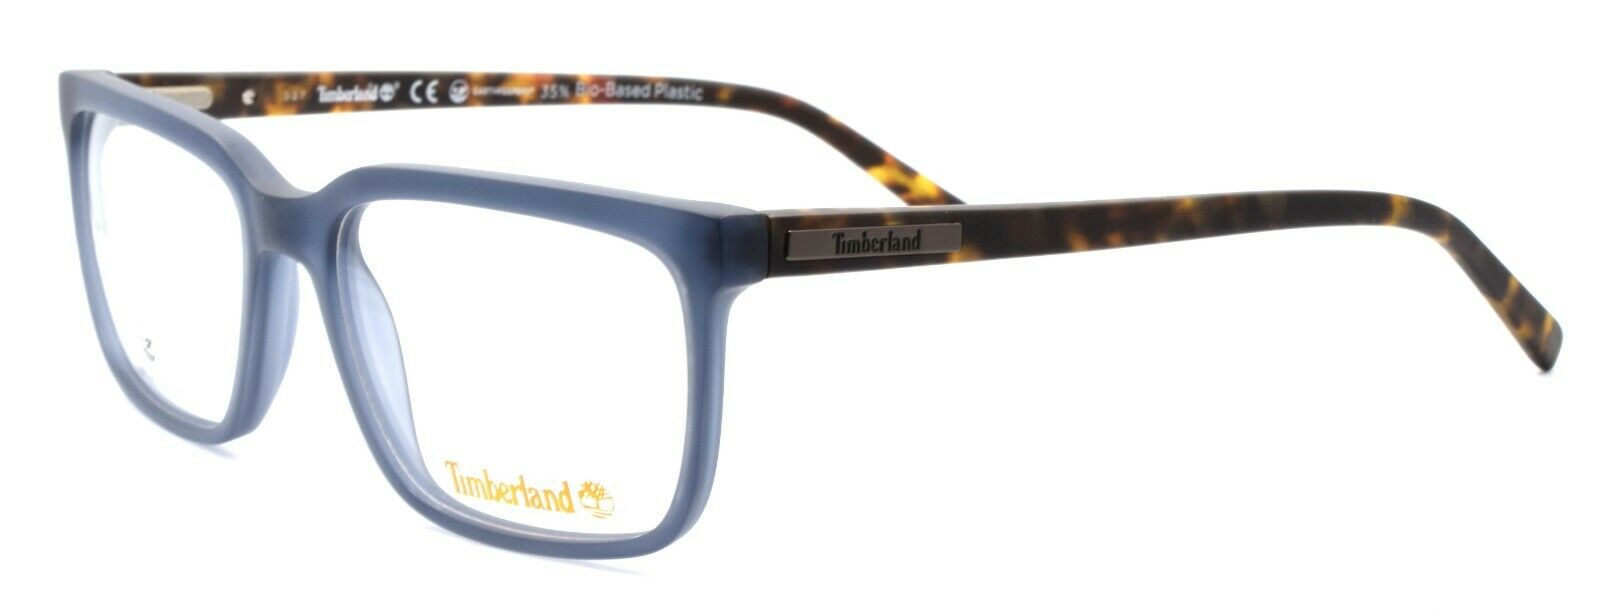 1-TIMBERLAND TB1580 092 Men's Eyeglasses Frames 54-17-145 Blue / Tortoise + CASE-664689913350-IKSpecs